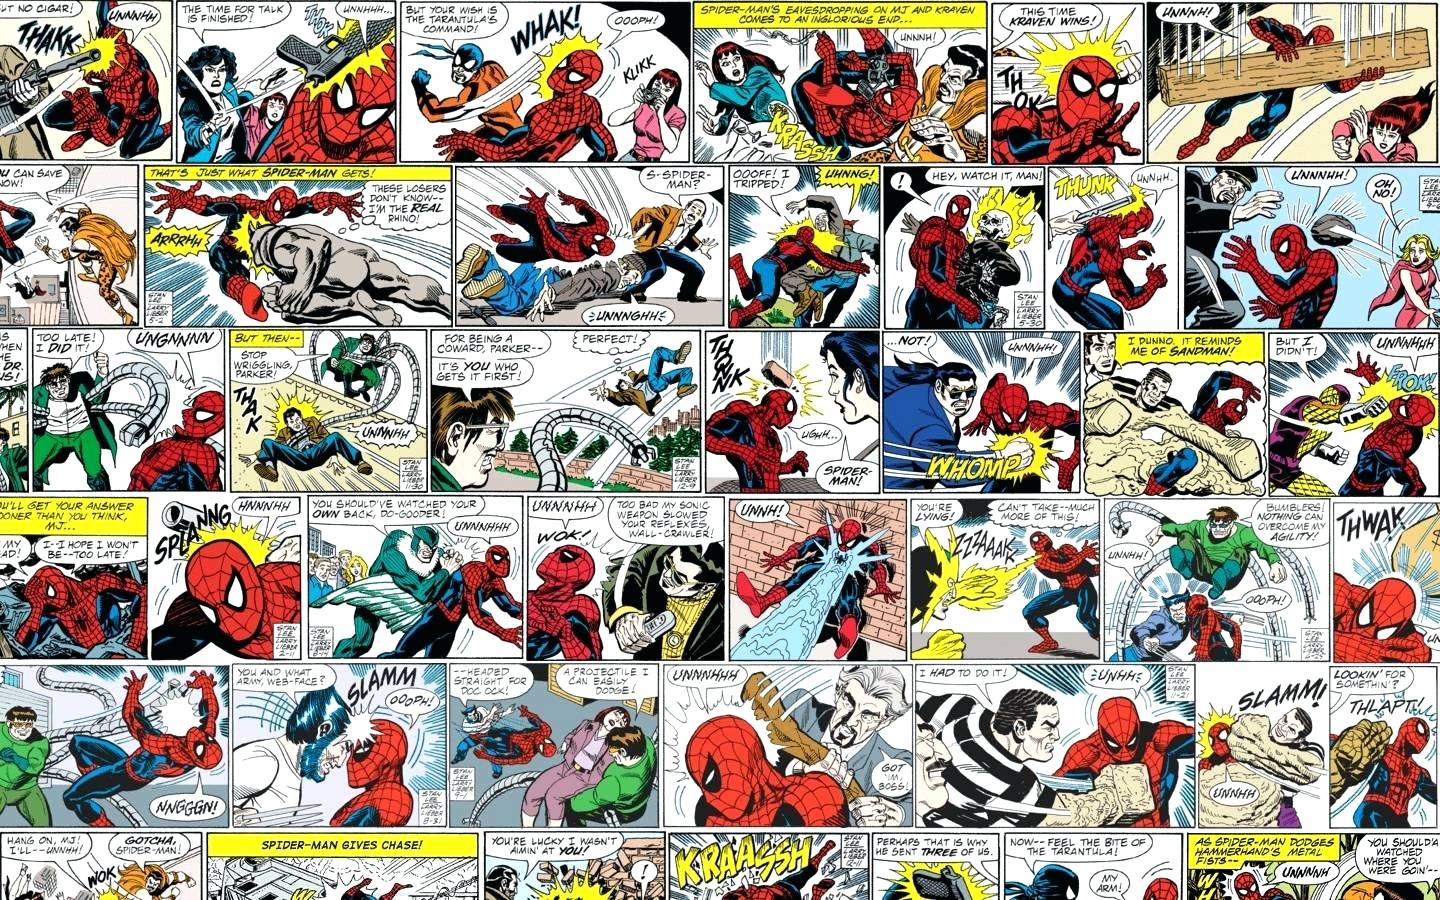 Comic Strip Wallpapers - Top Free Comic Strip Backgrounds - WallpaperAccess